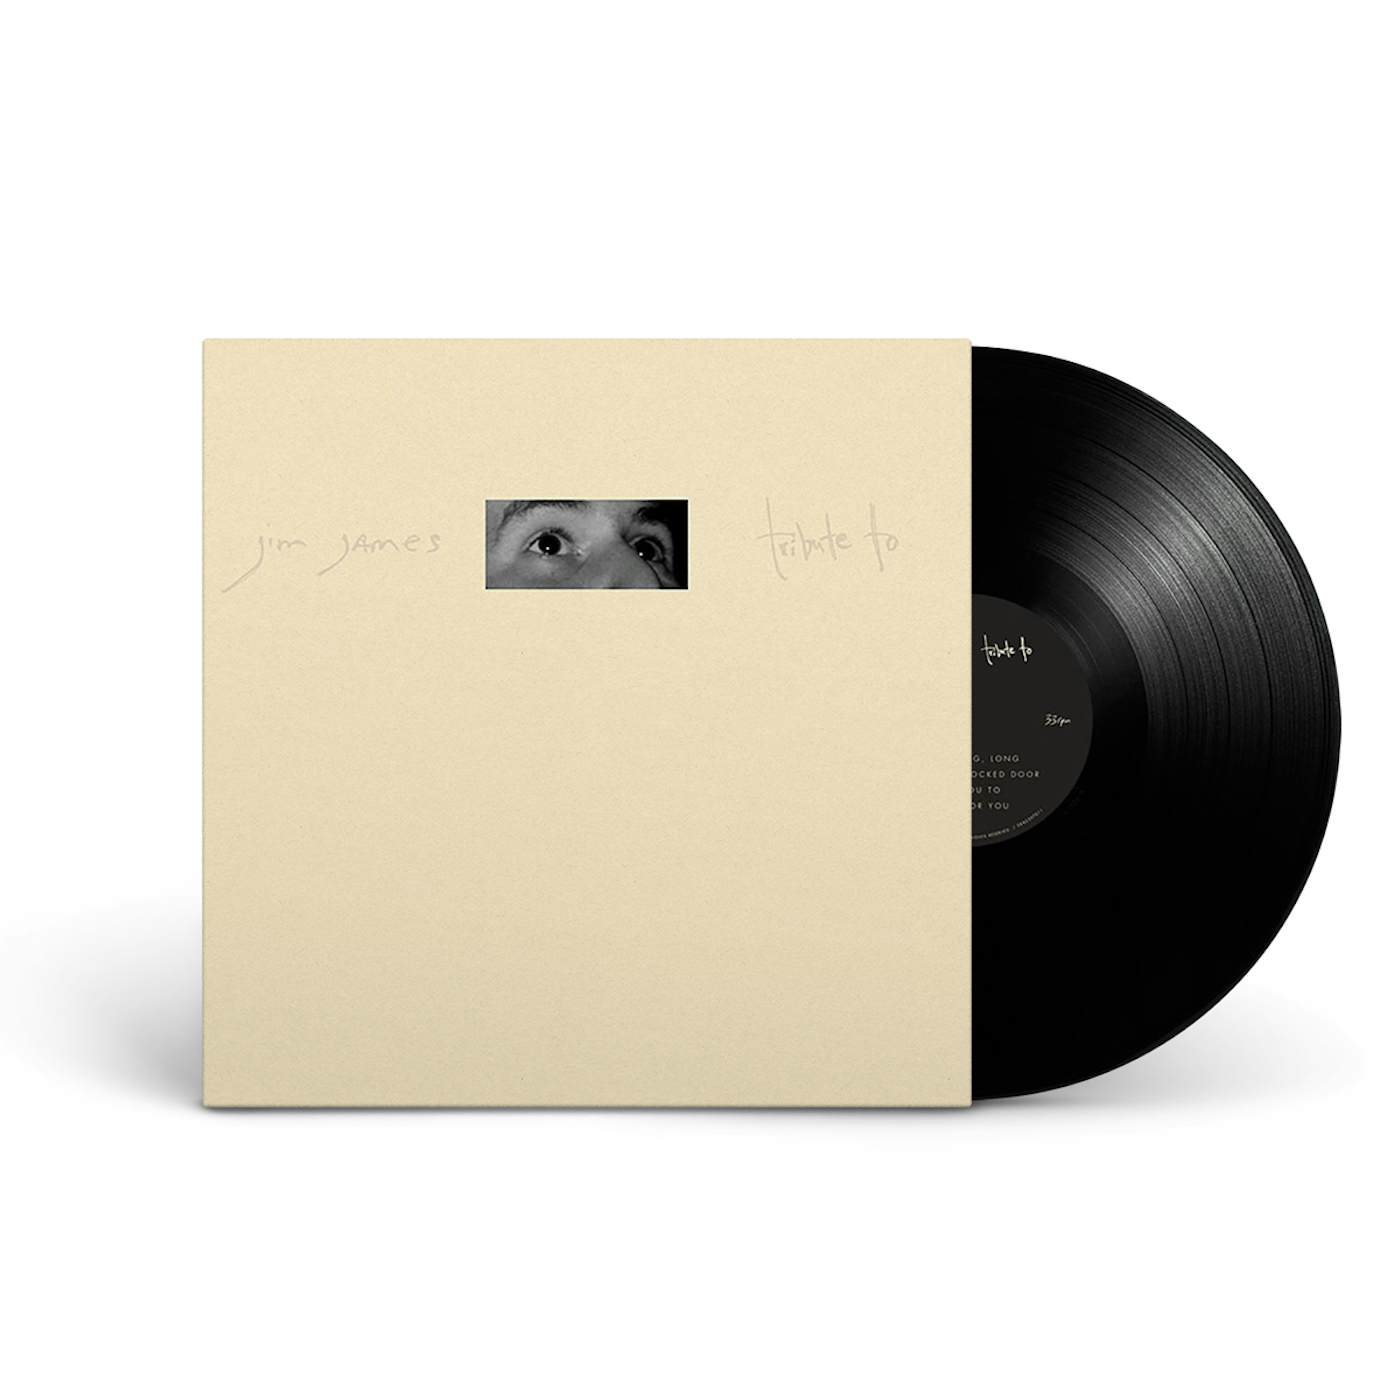 Jim James - Tribute To Reissue Vinyl